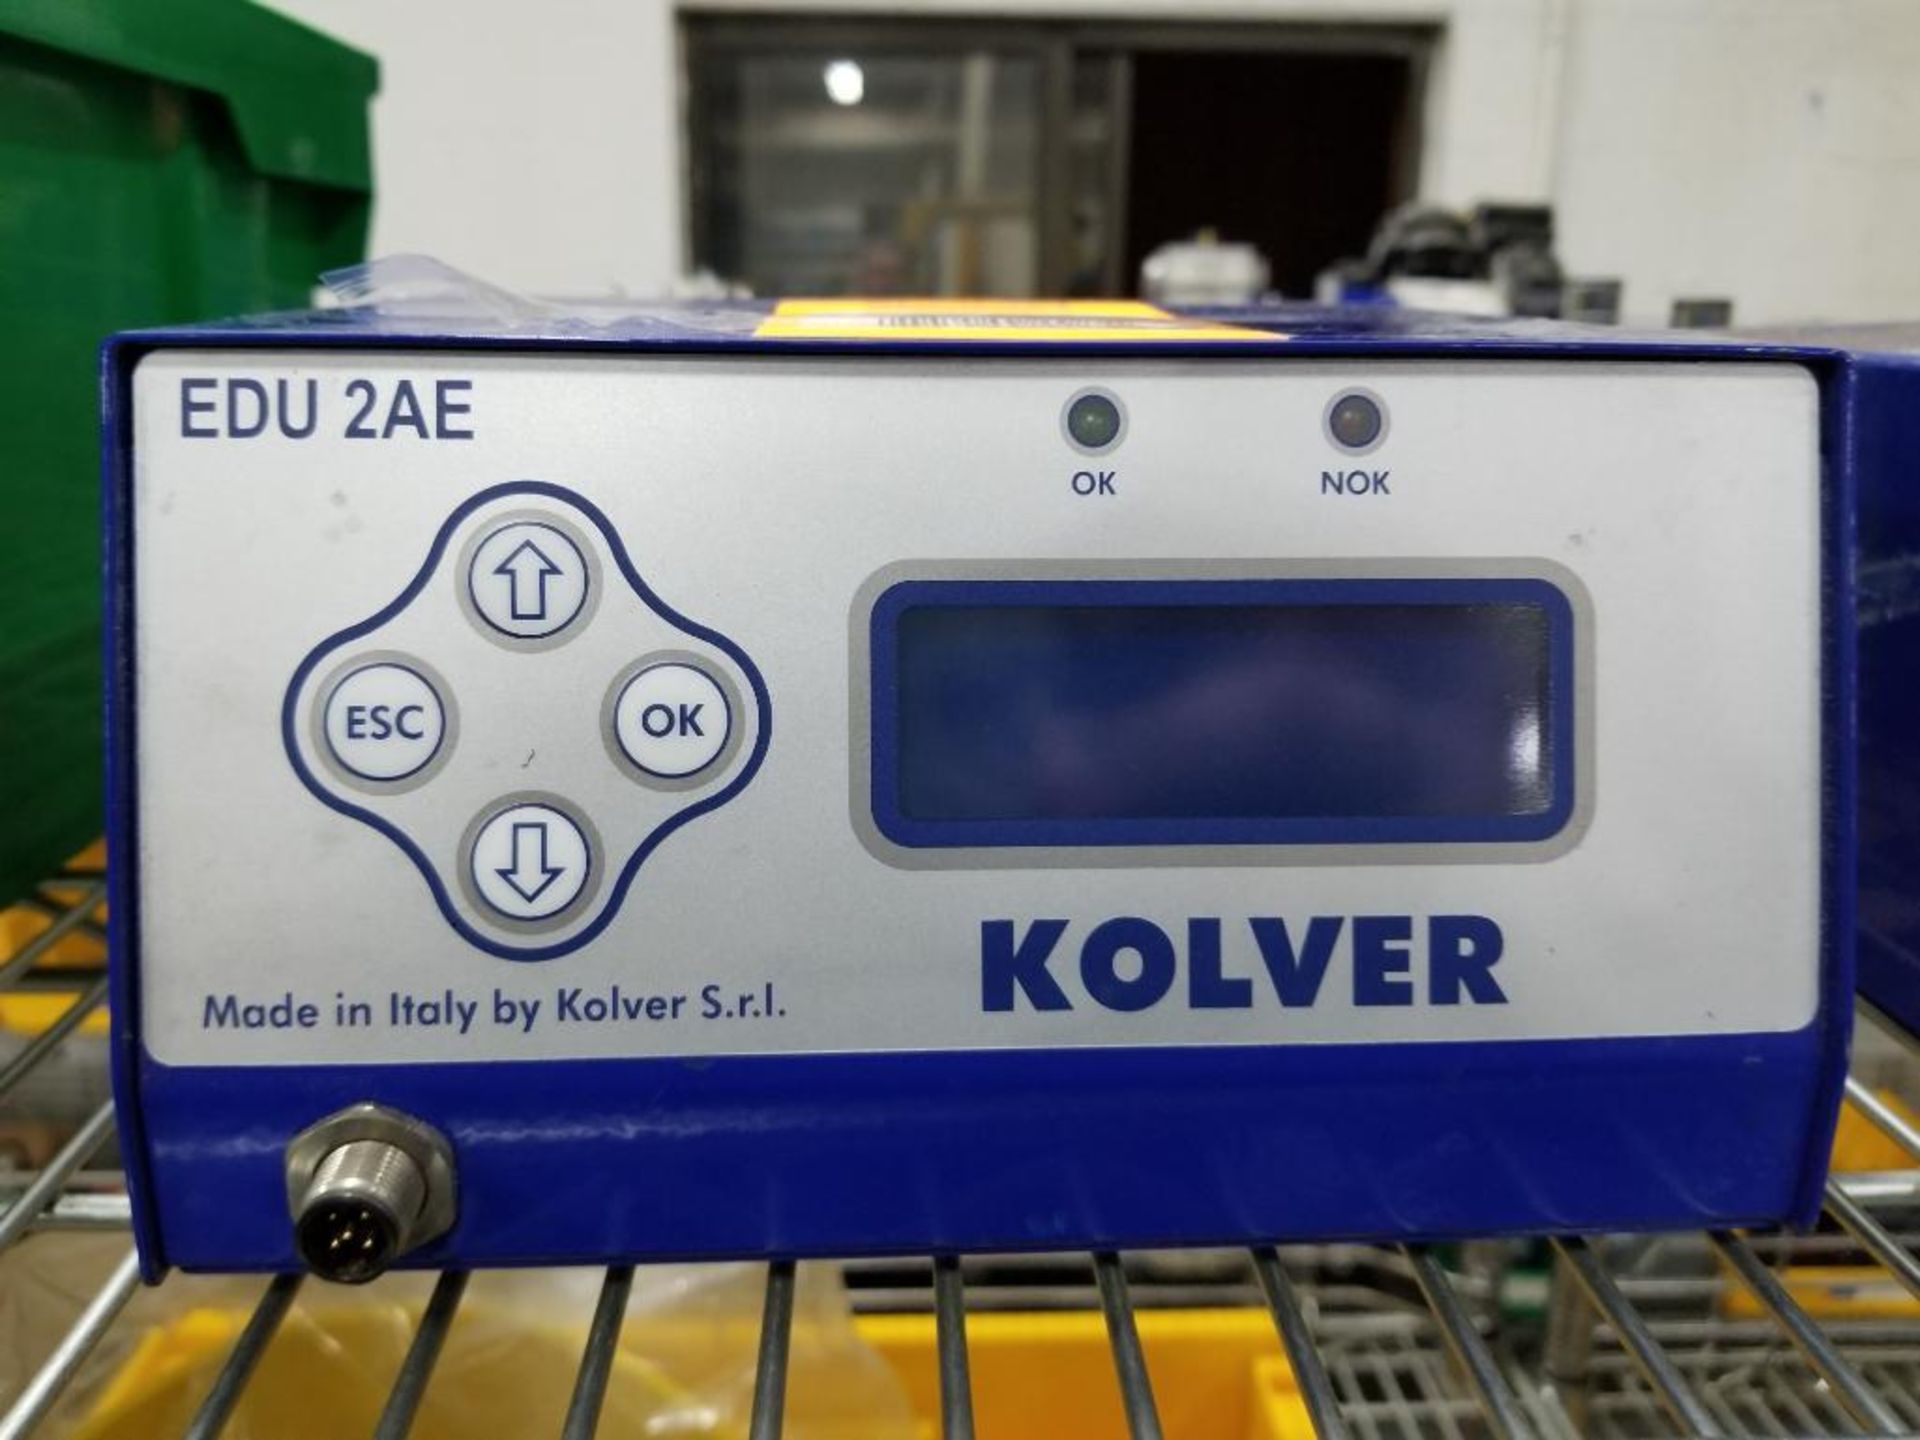 Kolver EDU-2AE torque driver controller.